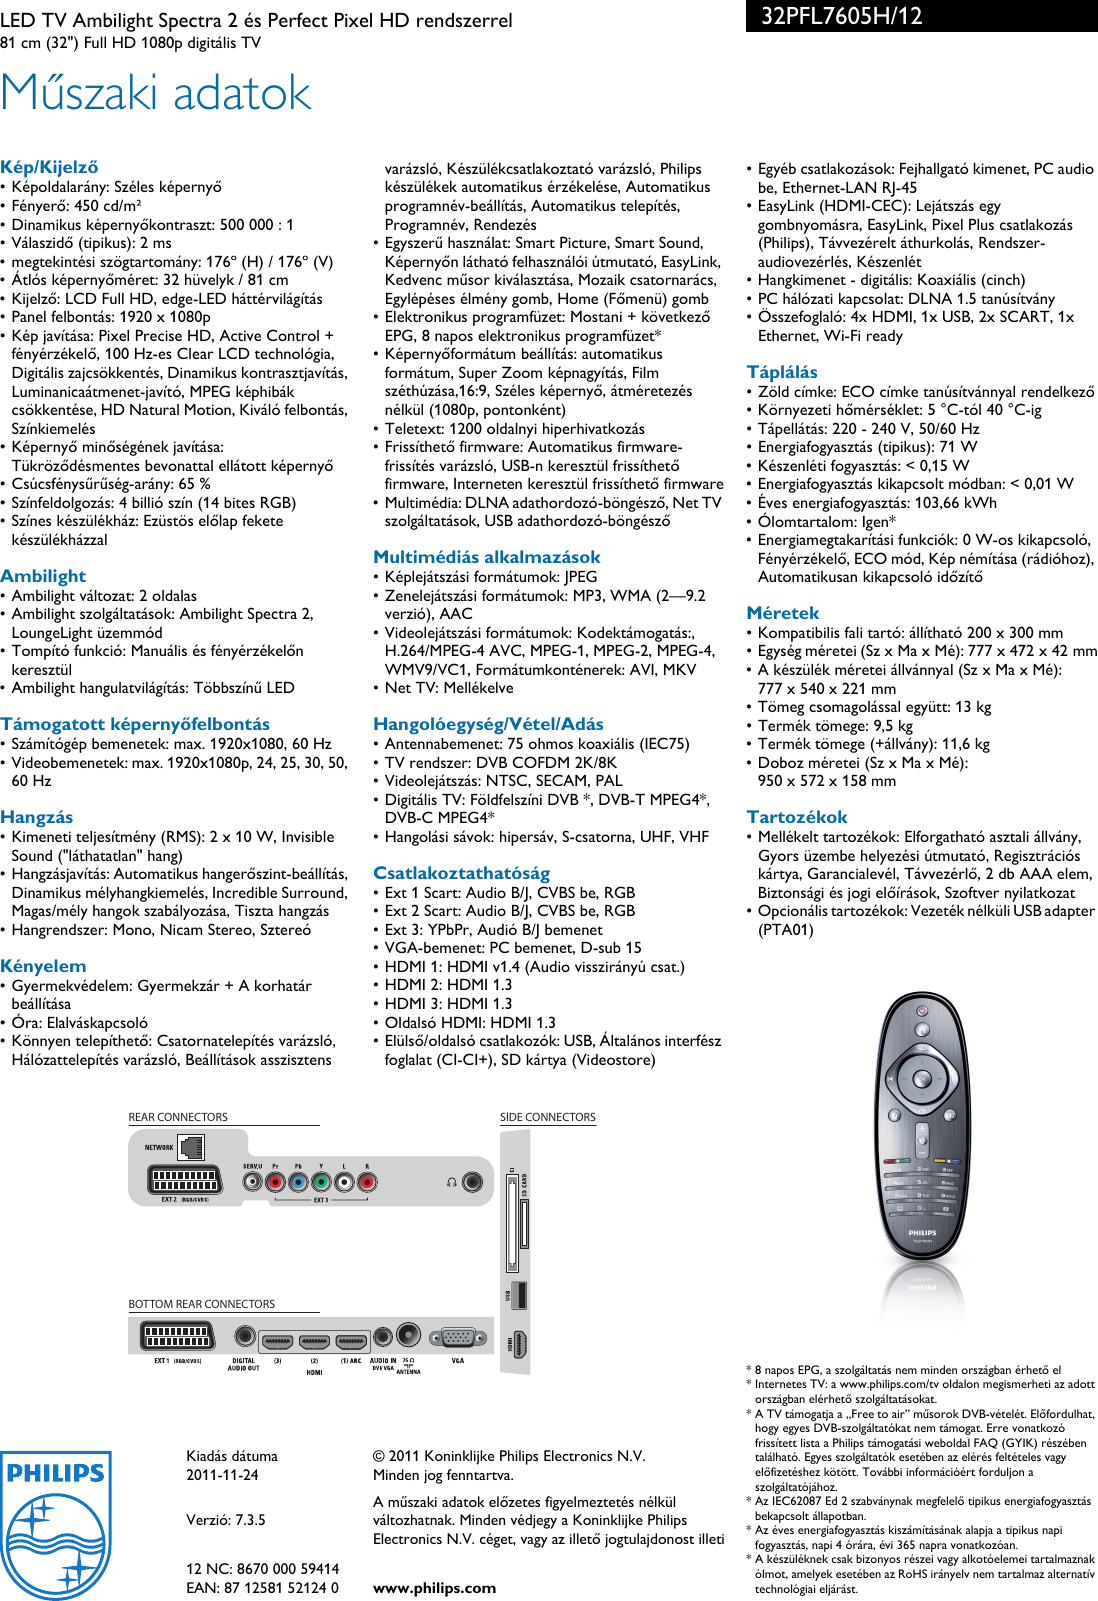 Page 3 of 3 - Philips 32PFL7605H/12 LED TV Ambilight Spectra 2 és Perfect Pixel HD Rendszerrel User Manual Kiadvány 32pfl7605h 12 Pss Hunhu